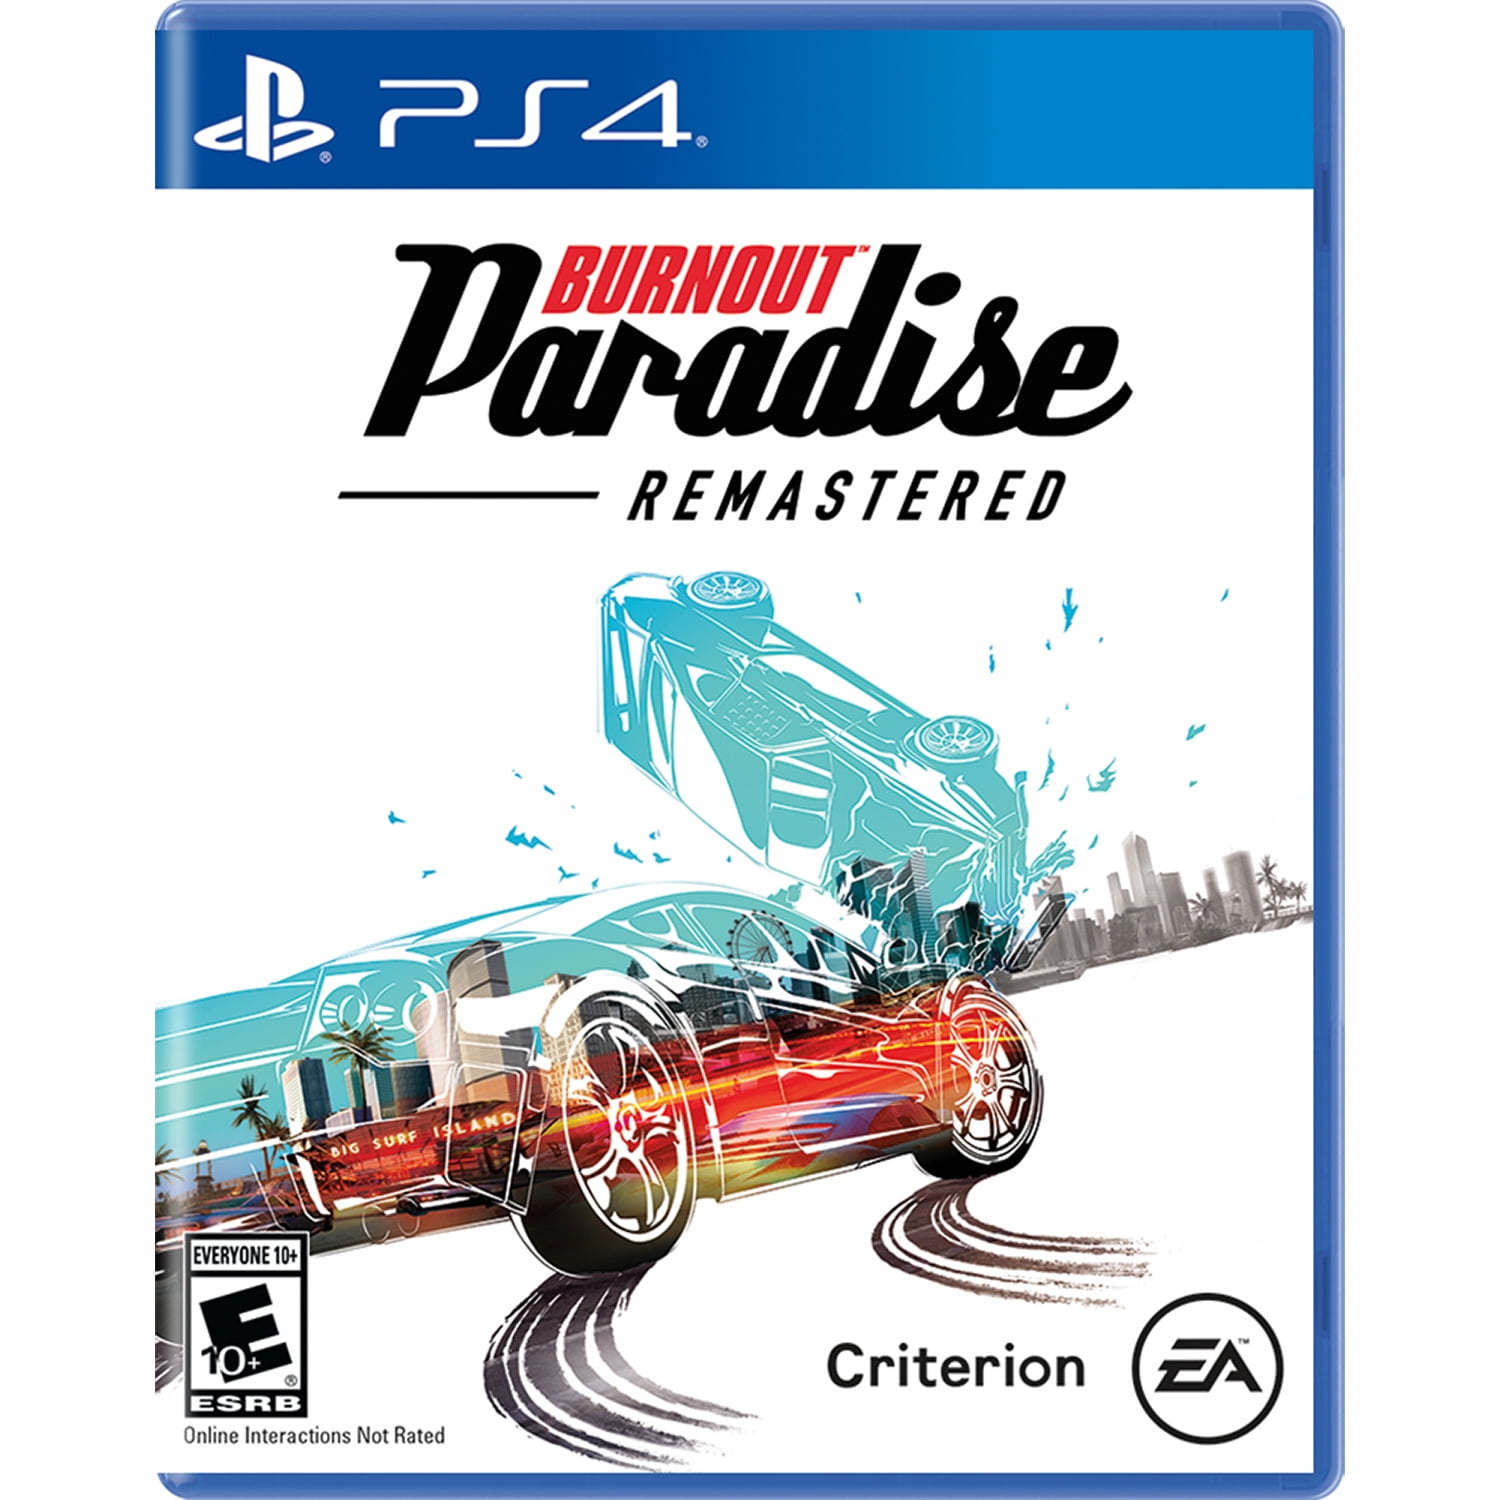 Burnout Paradise Remastered Electronic Arts Playstation 4 014633738971 Walmart Com Walmart Com